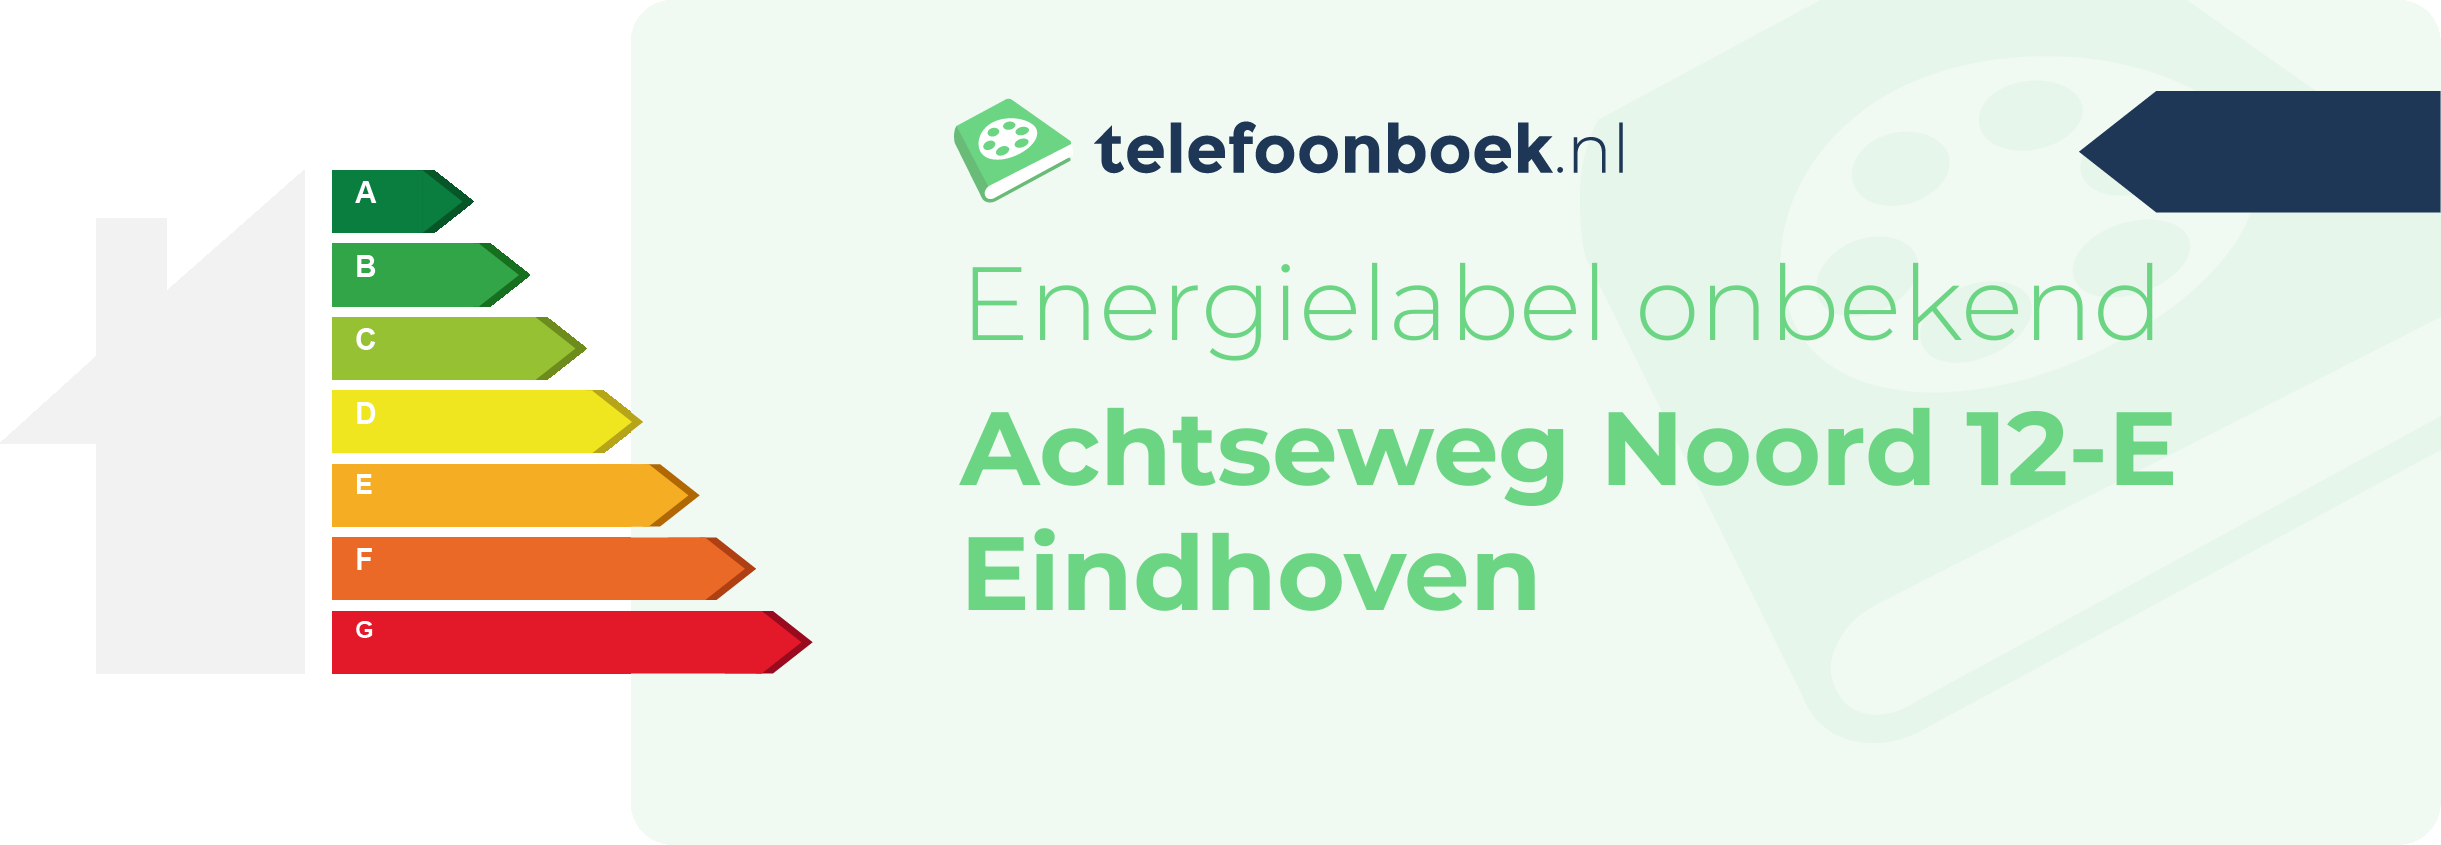 Energielabel Achtseweg Noord 12-E Eindhoven